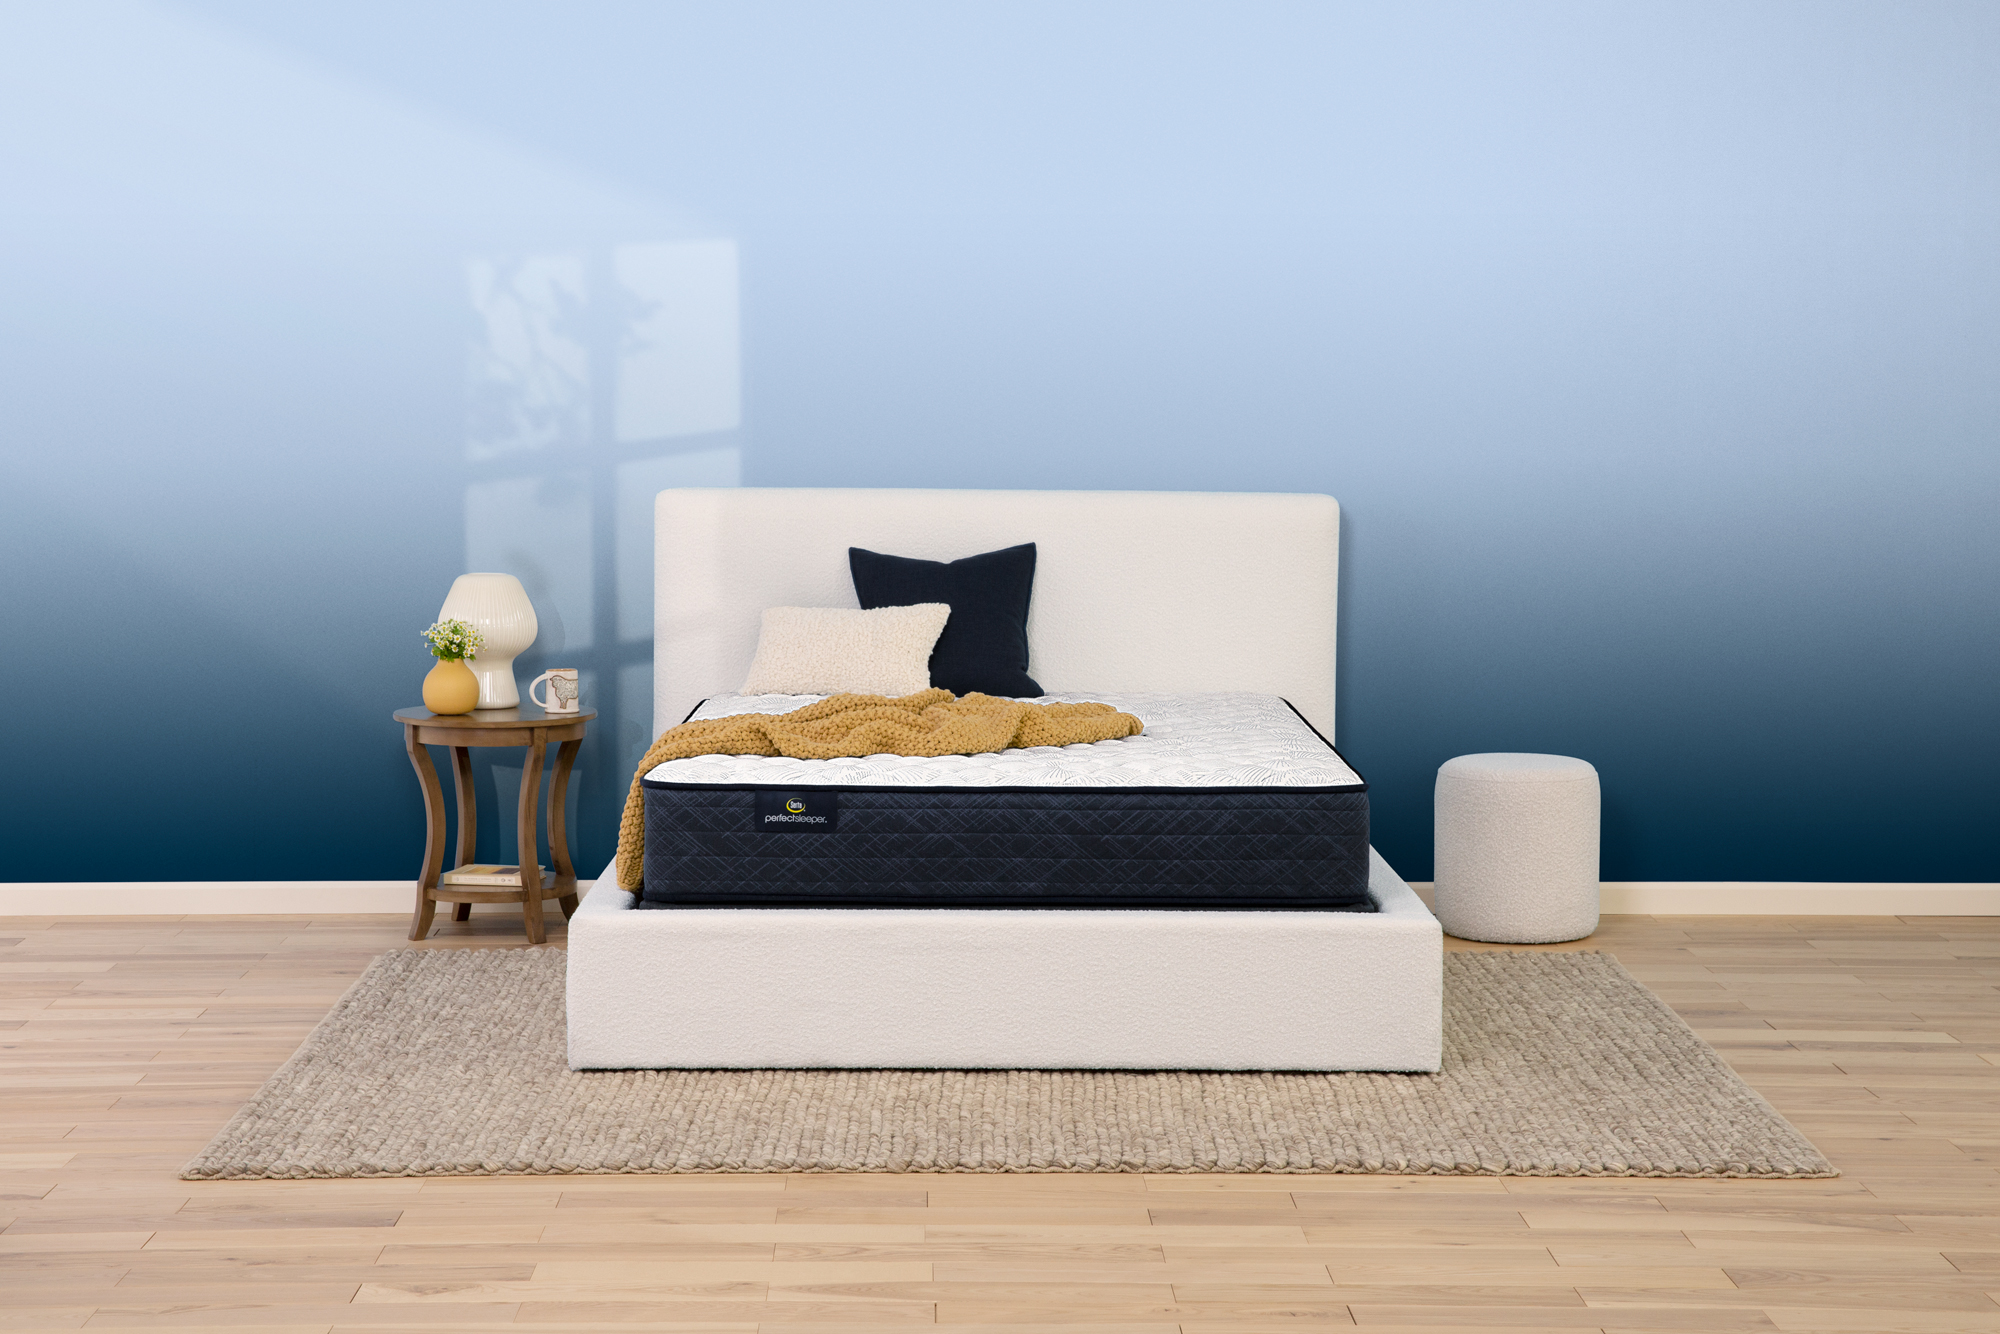 Photo of the Serta Perfect Sleeper Adoring Night Firm mattress.